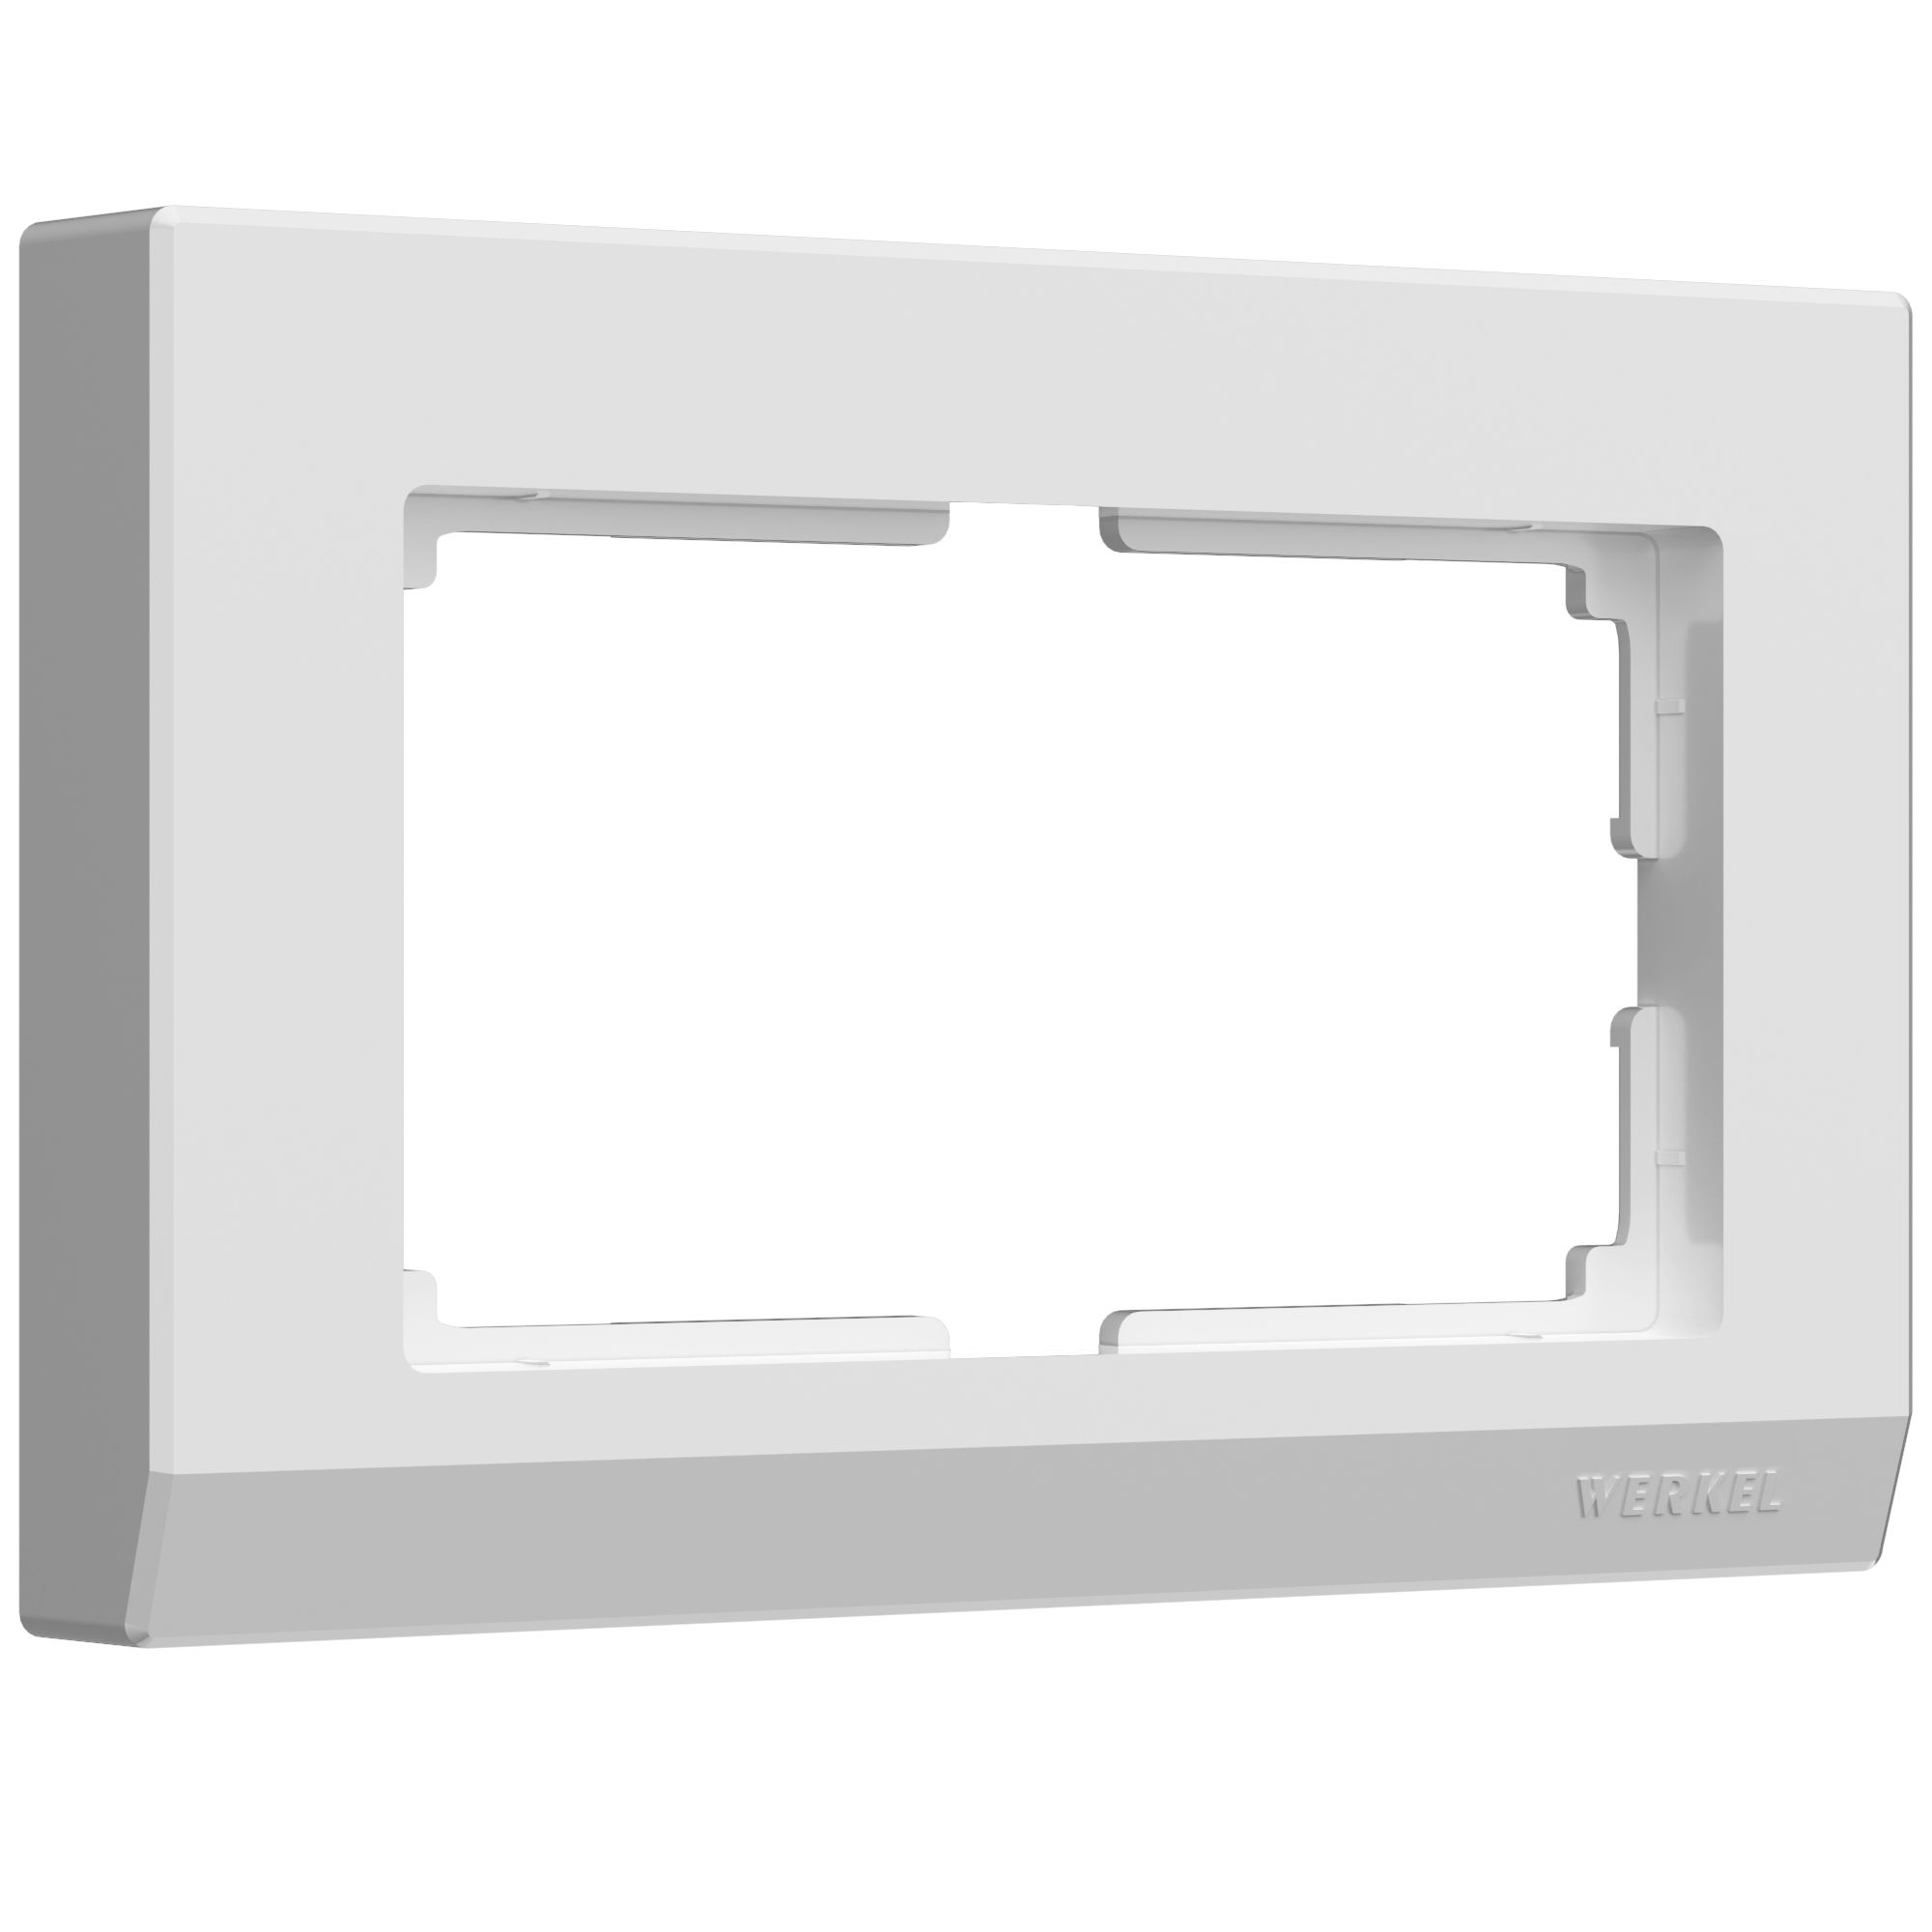 Рамка для двойной розетки (белый) Werkel Stark белый W0081801. Фото 1